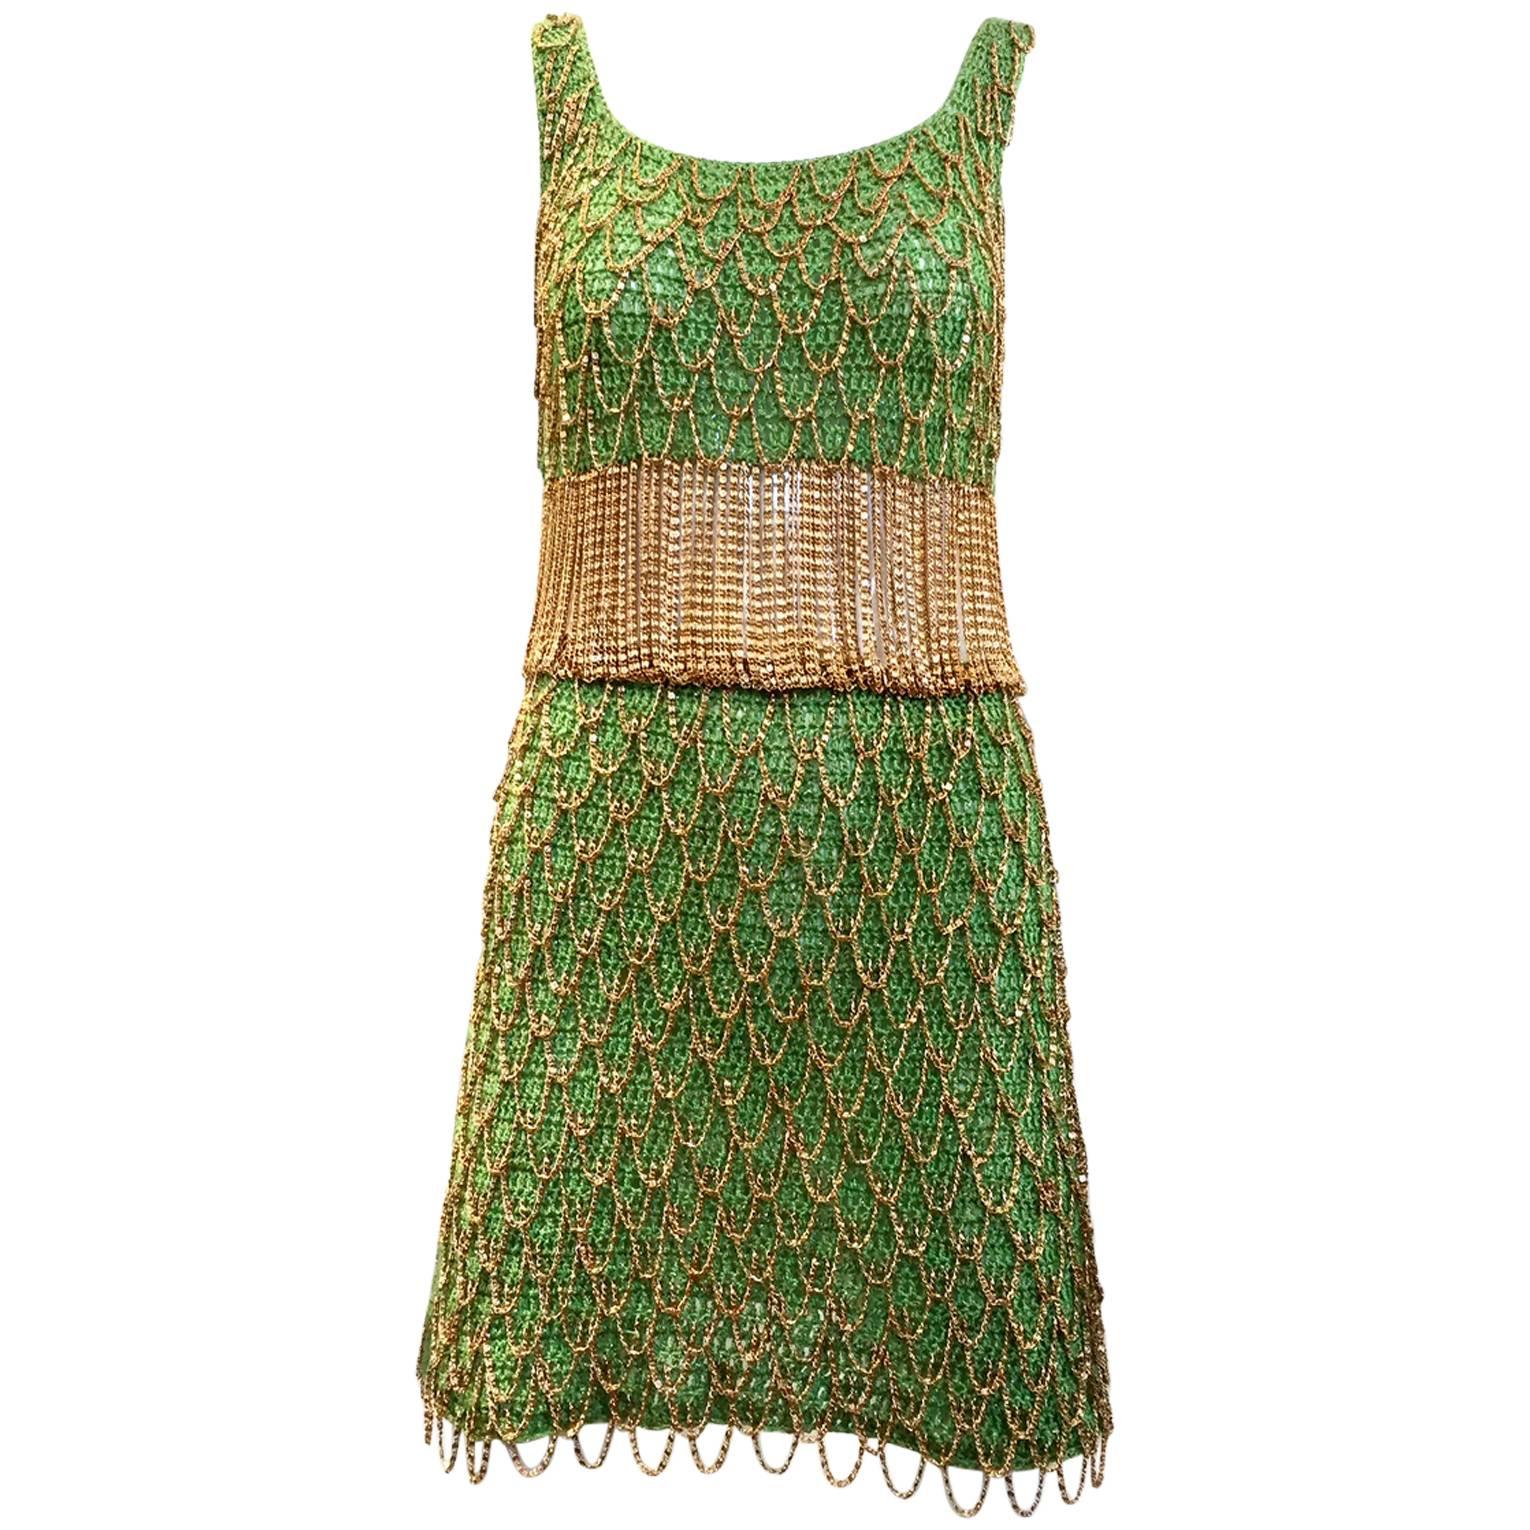 1970s Loris Azzaro gold and green knit chain dress